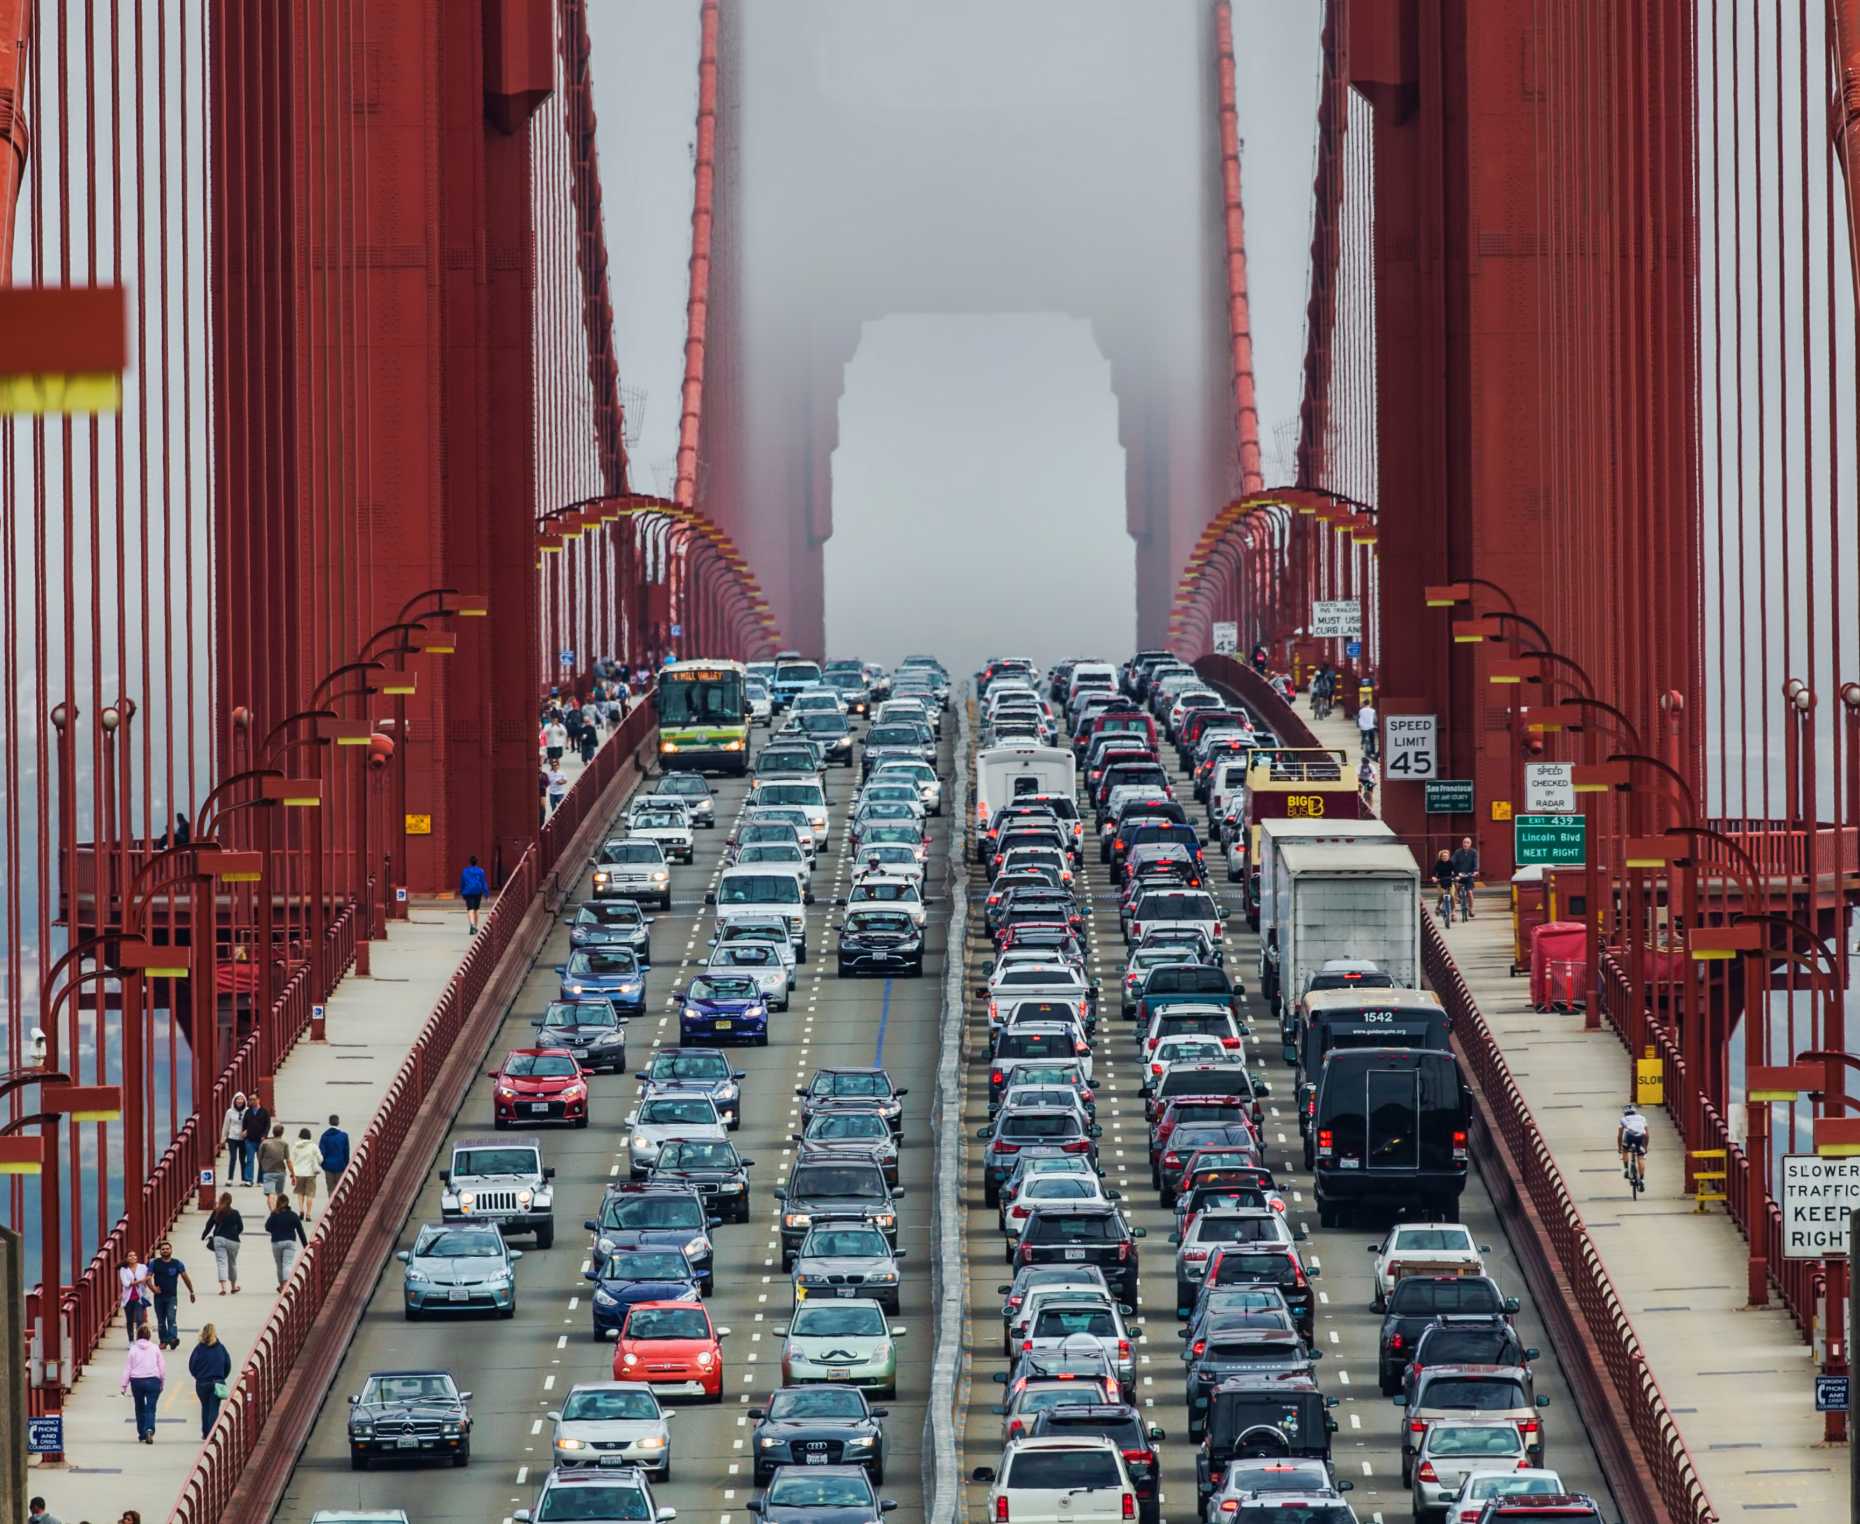 Enlarged view: Traffic jam in San Francisco